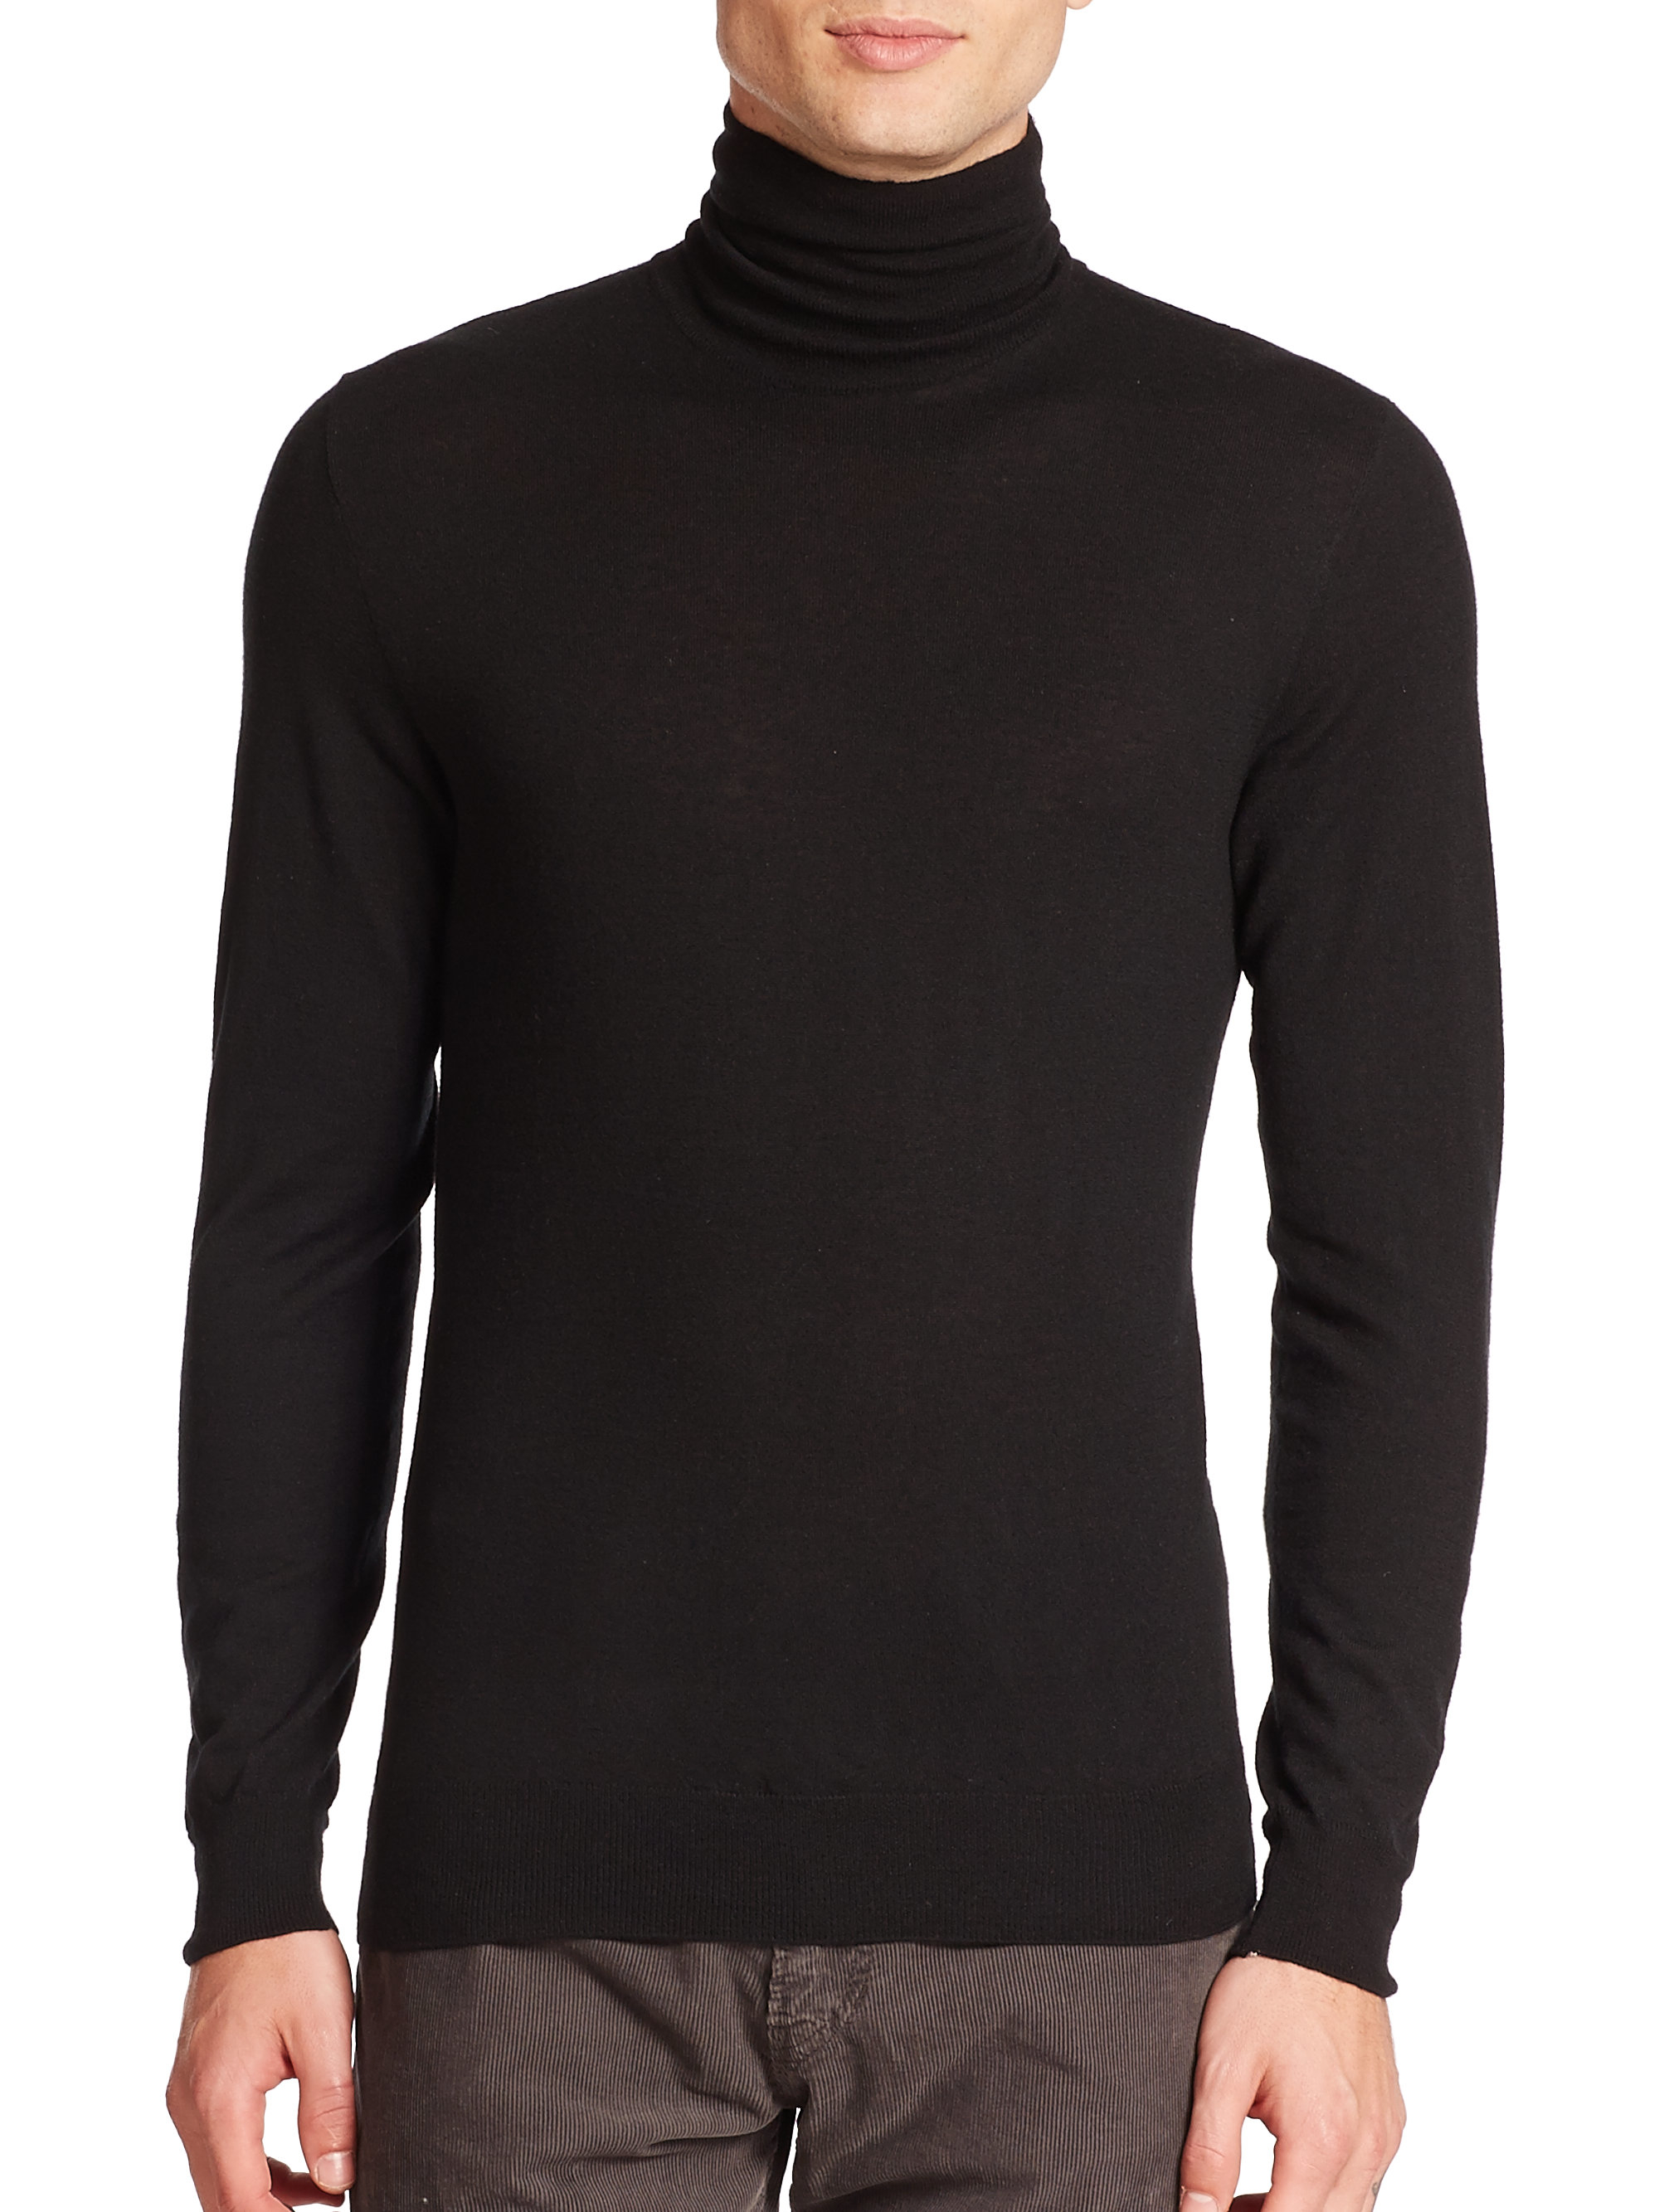 Lyst - Ralph Lauren Black Label Merino Wool Turtleneck Sweater in Black ...